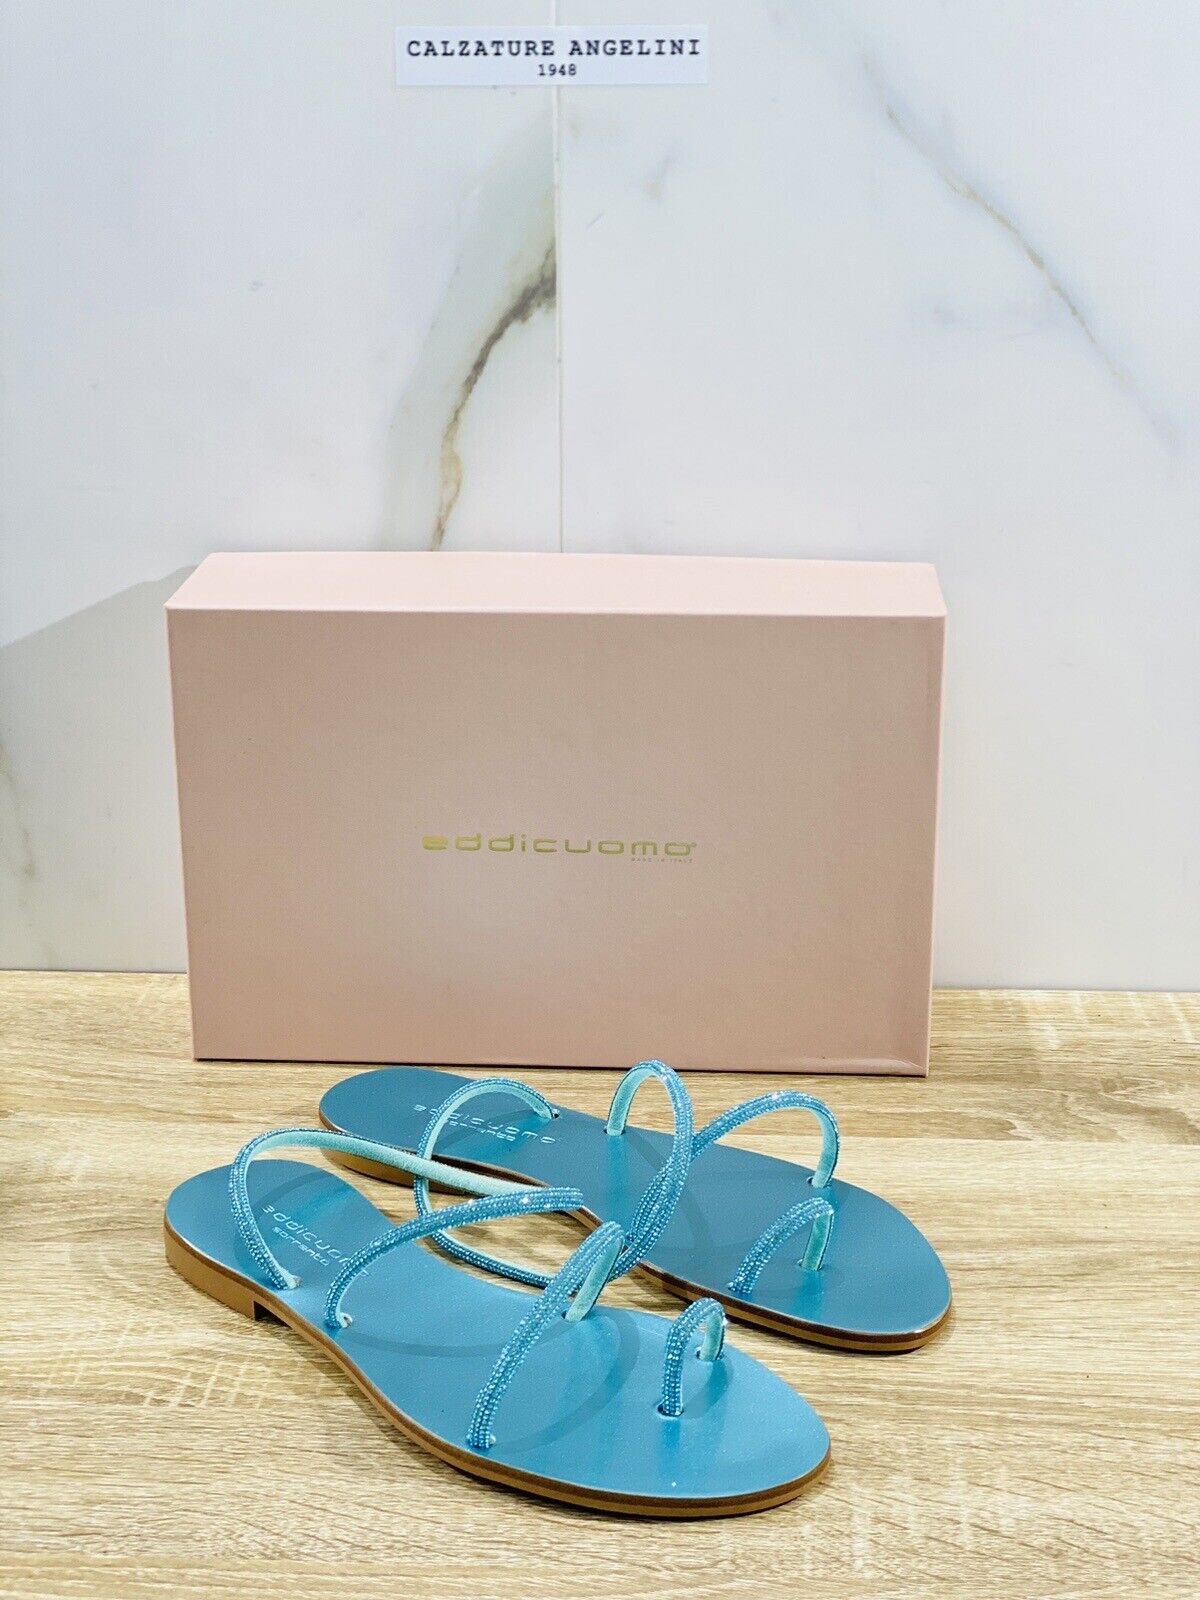 Eddi Cuomo Luxury Sandals Donna Cannes Turchese Fatti A Mano Totally Handmade 38